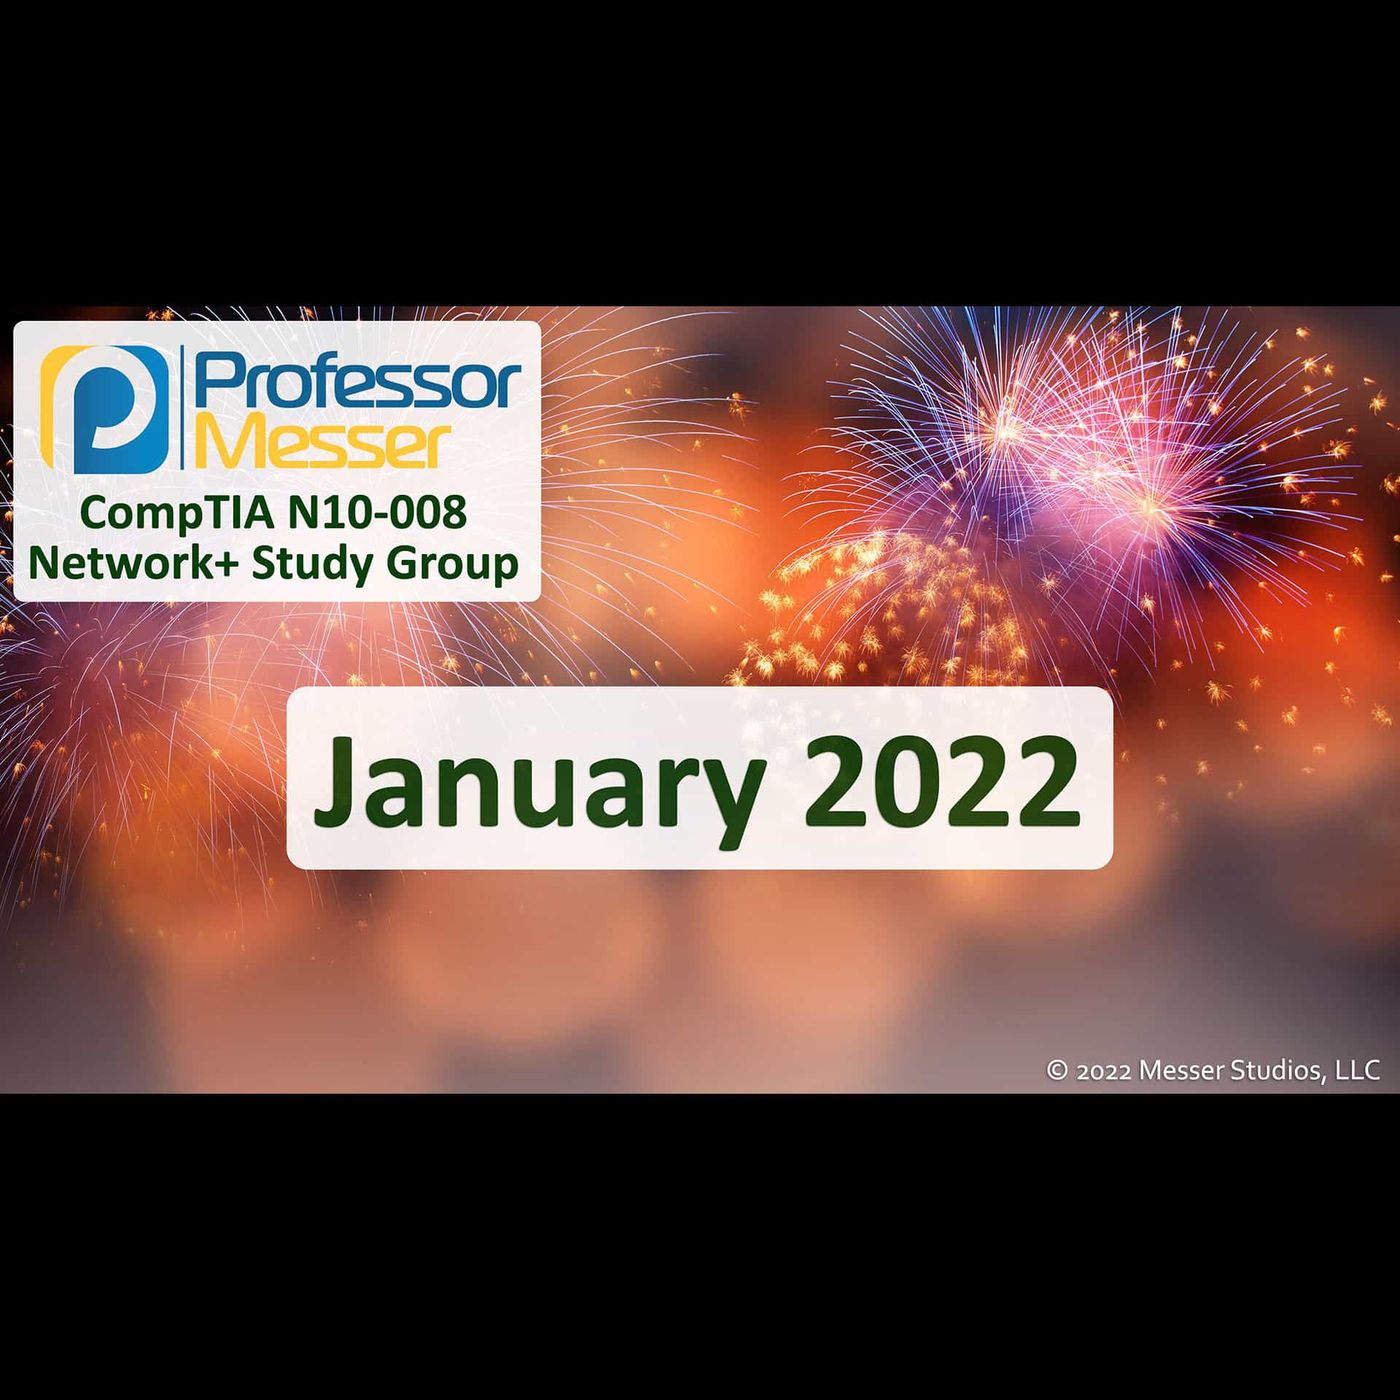 Professor Messer's N10-008 Network+ Study Group - January 2022